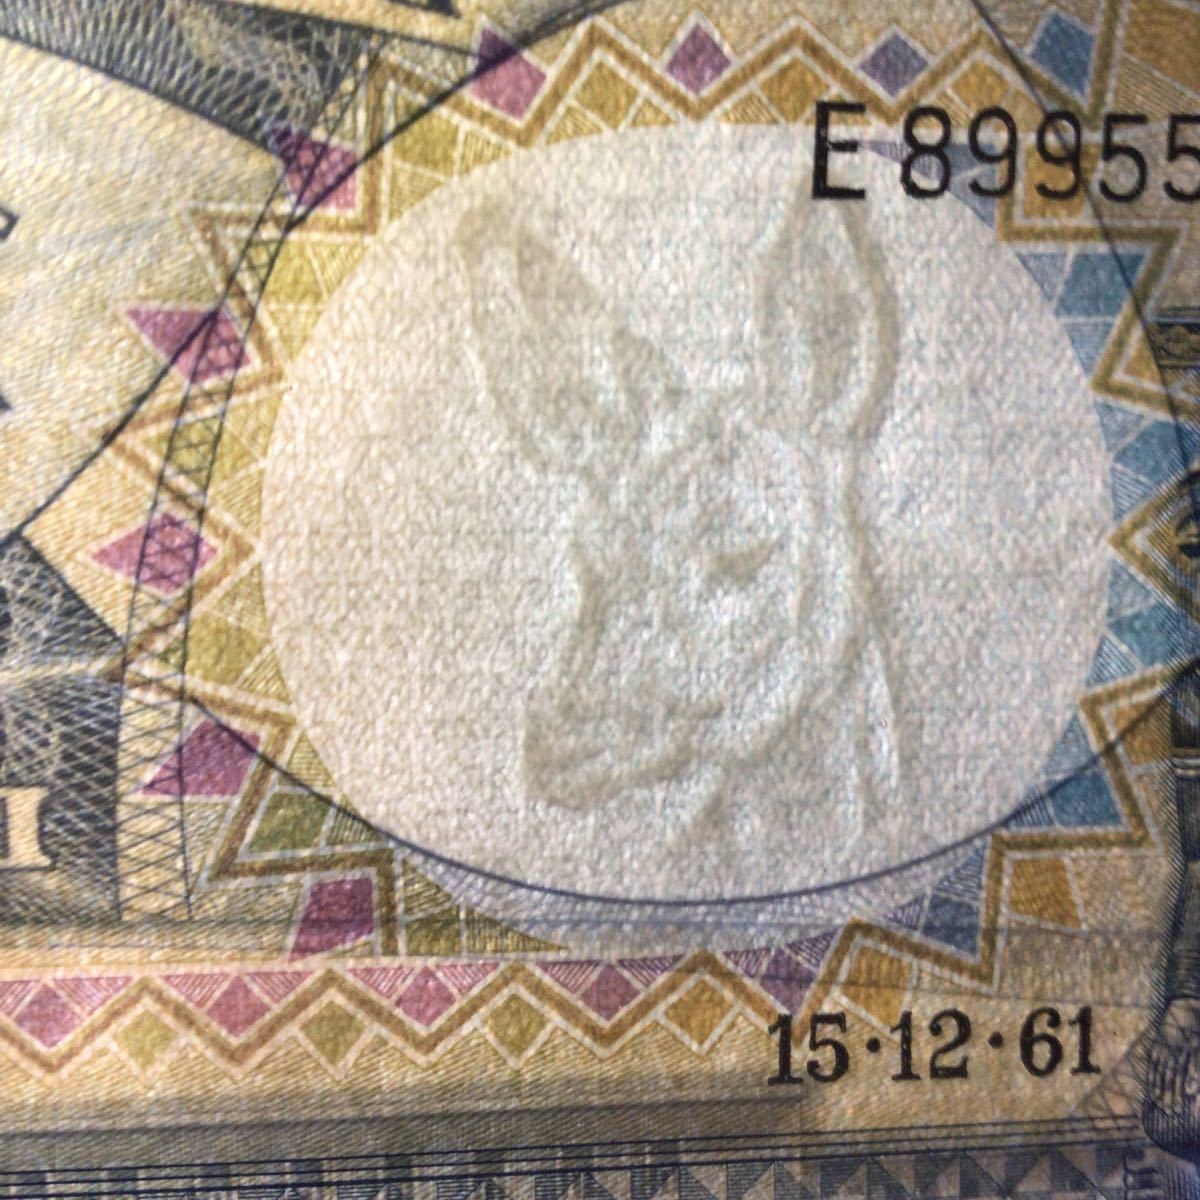 World Banknote Grading CONGO DEMOCRATIC REPUBLIC〔KINSHASA〕1000 Francs【1961】『ICG Grading AU/UNC 60』_画像3